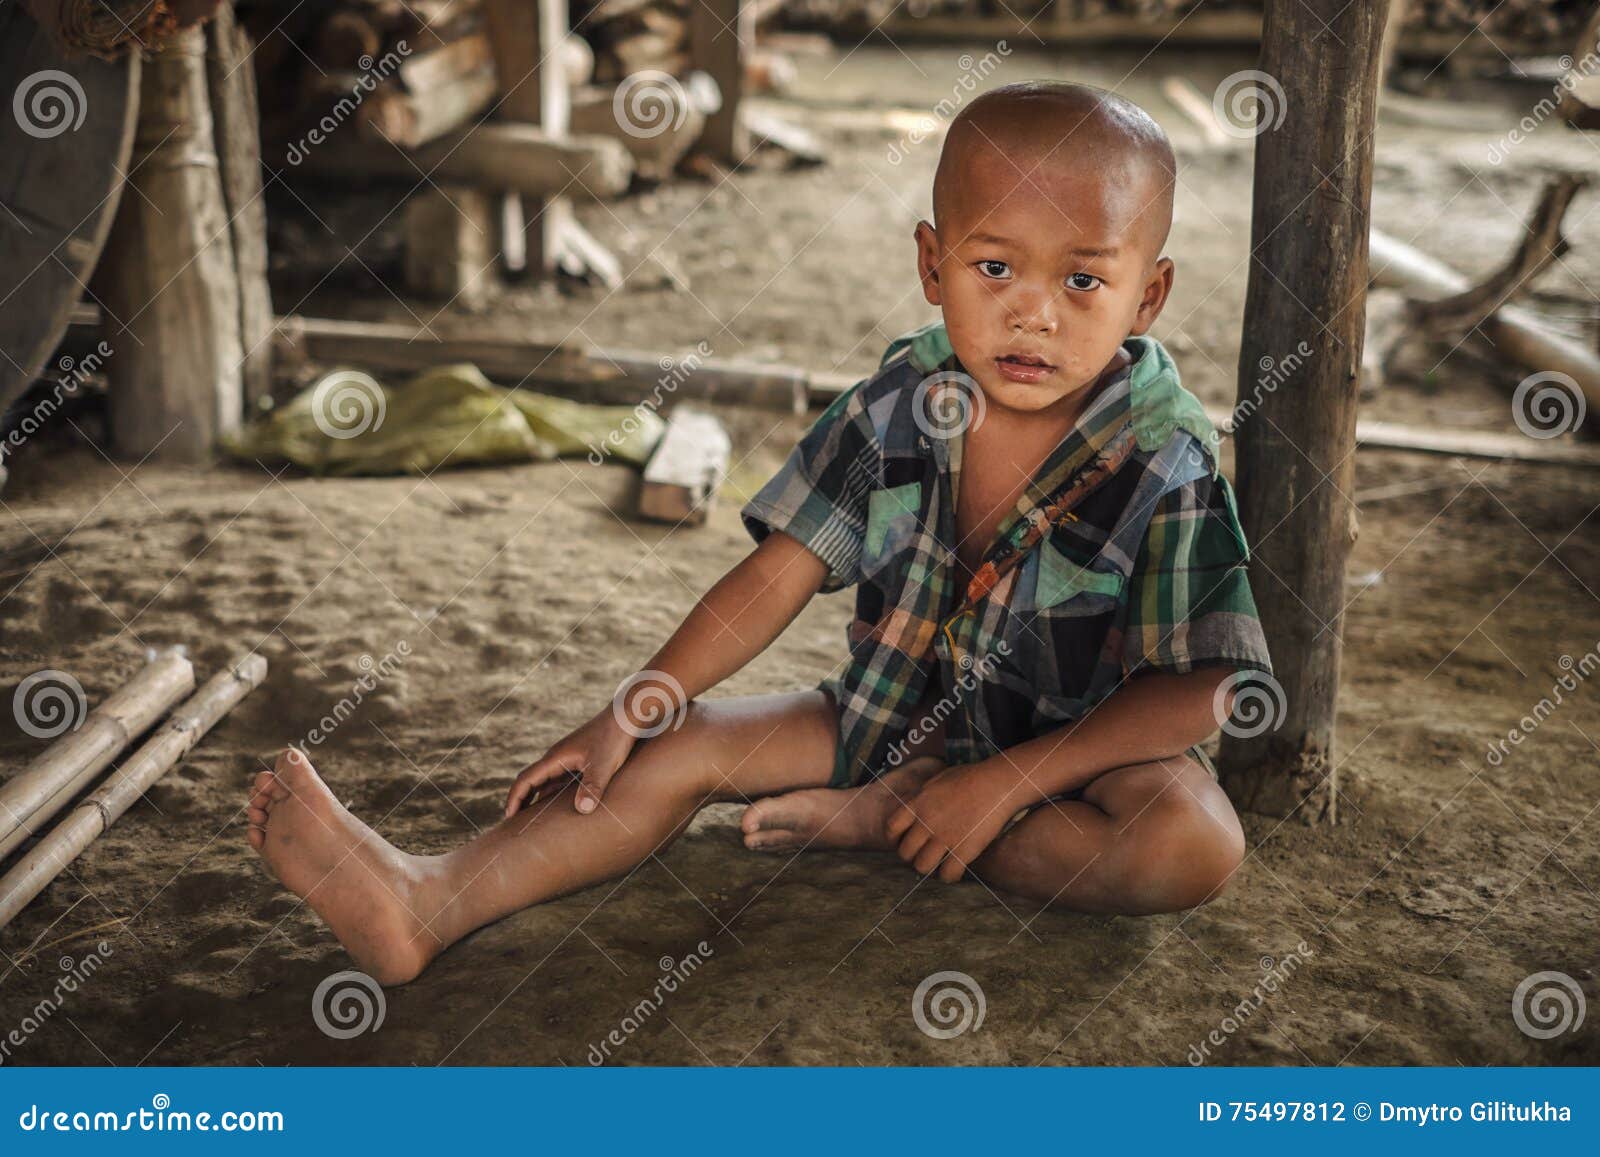 Rural Life of Myanmar Children Editorial Photography - Image of burmese ...